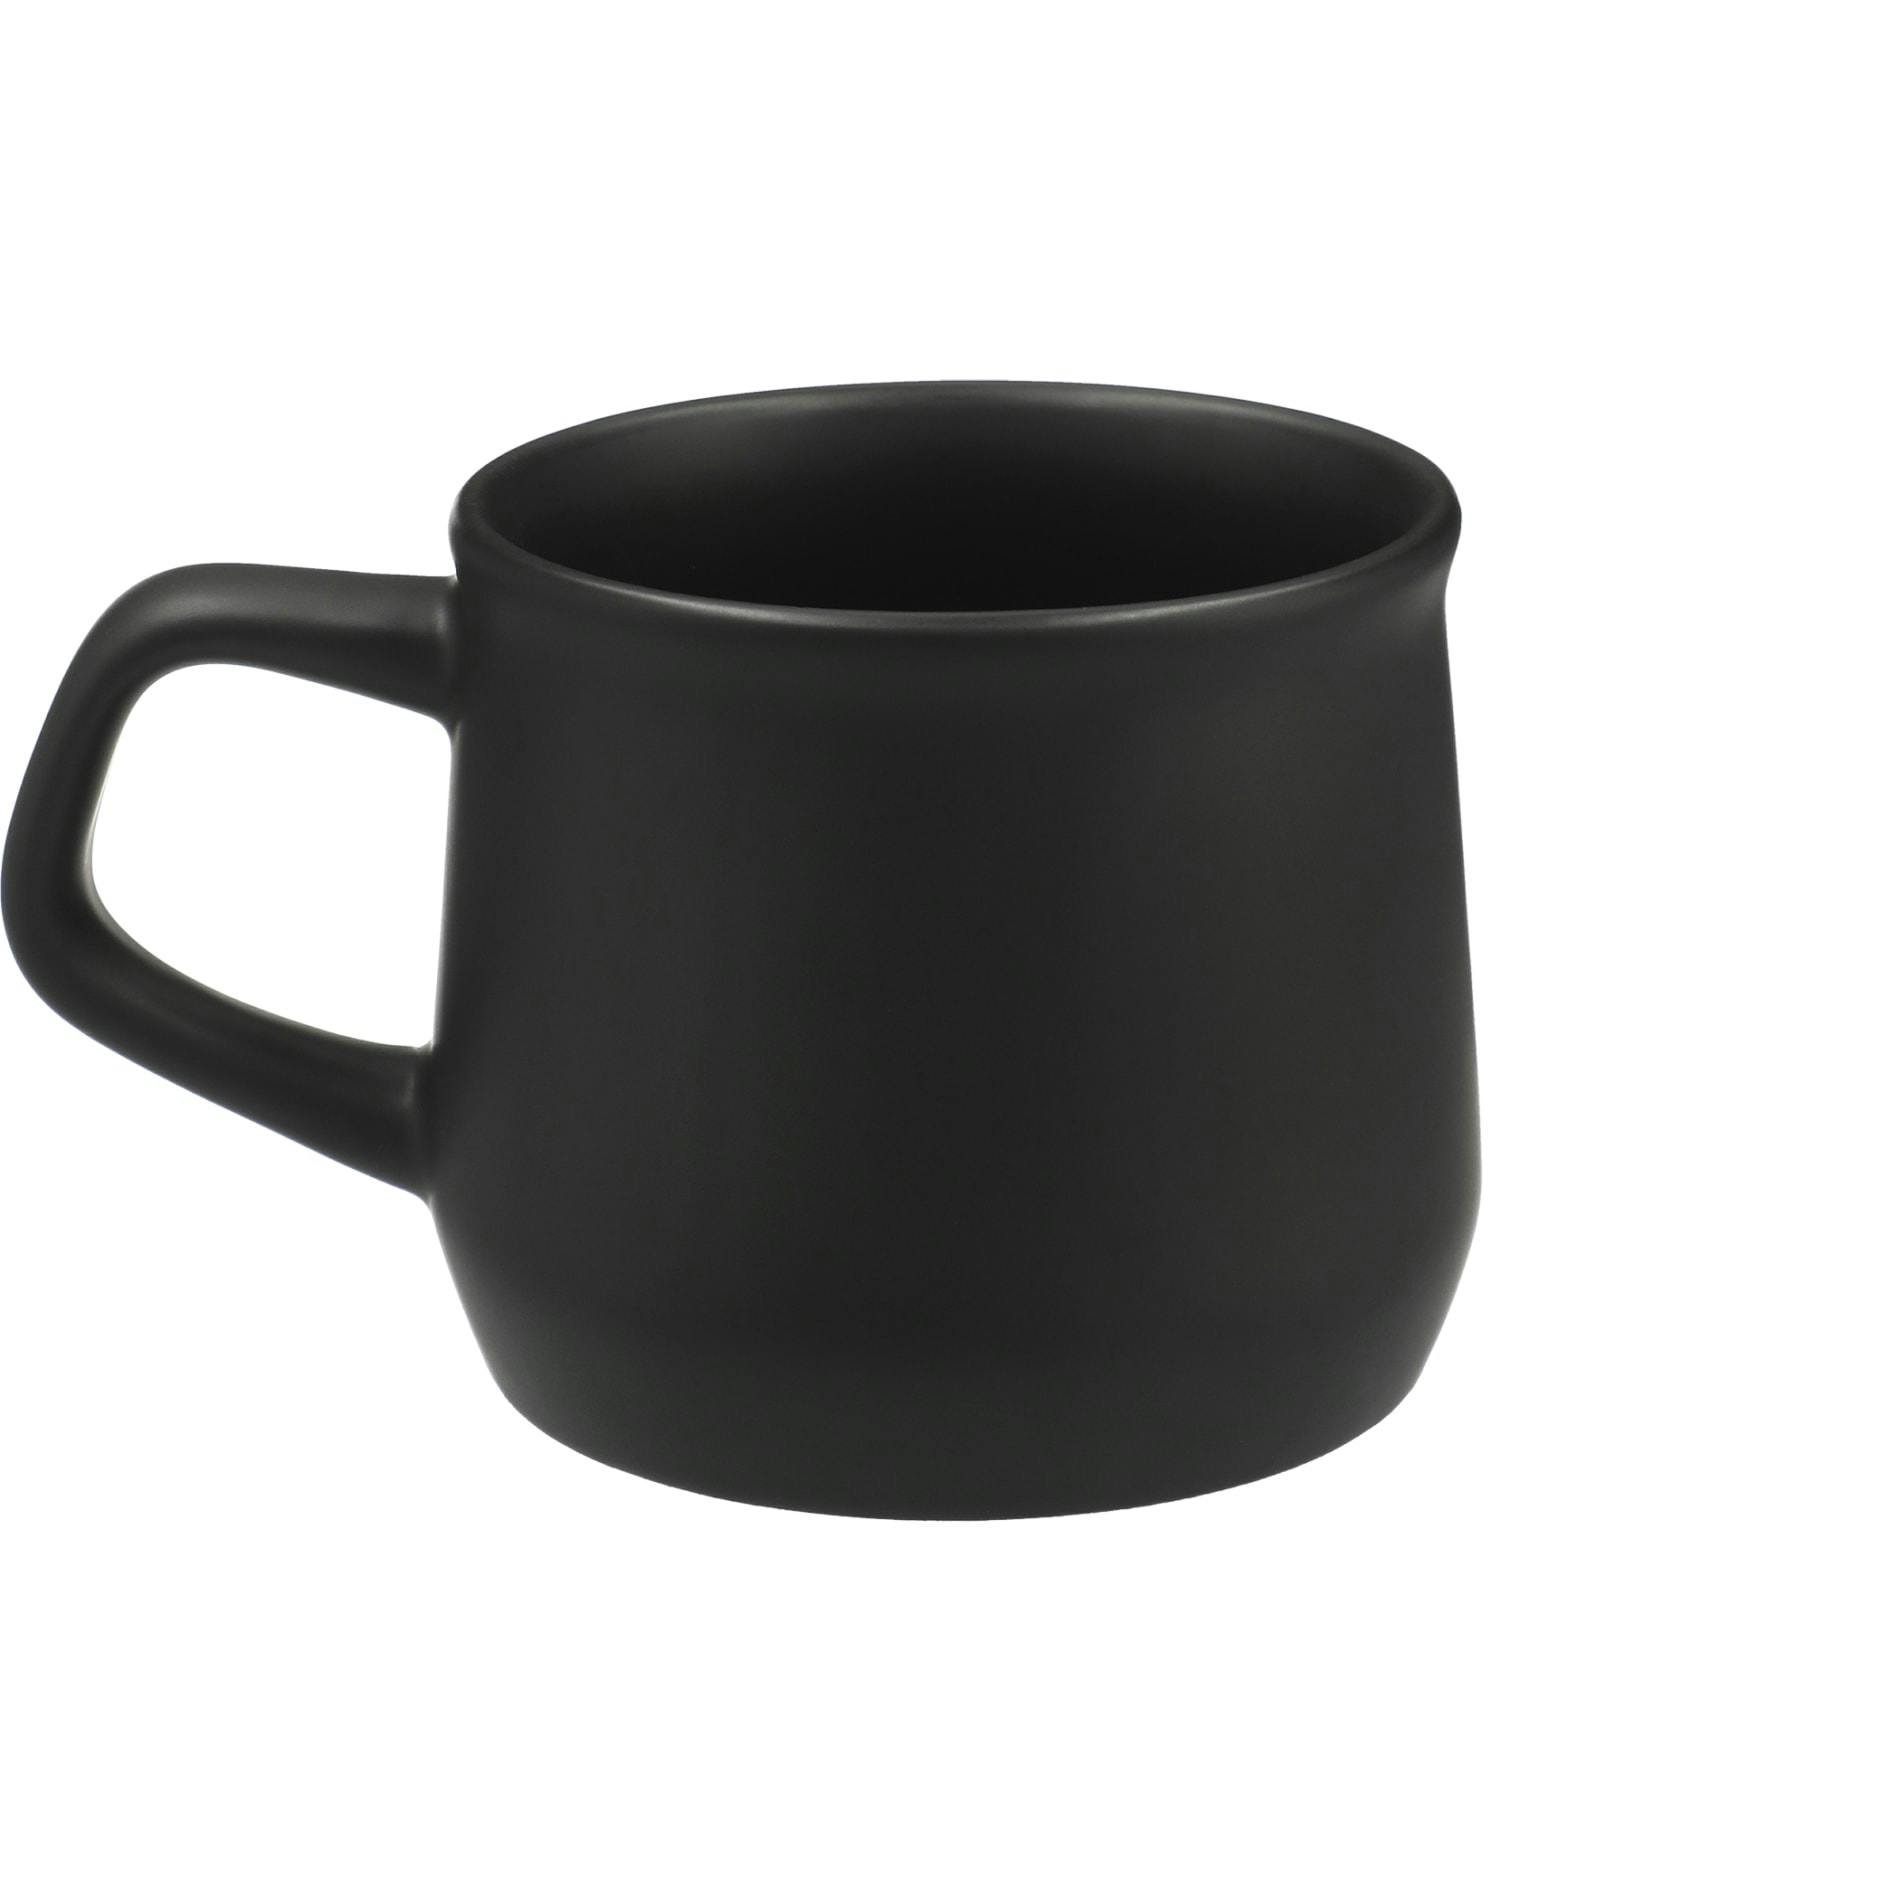 Angus 12oz Ceramic Mug - additional Image 2